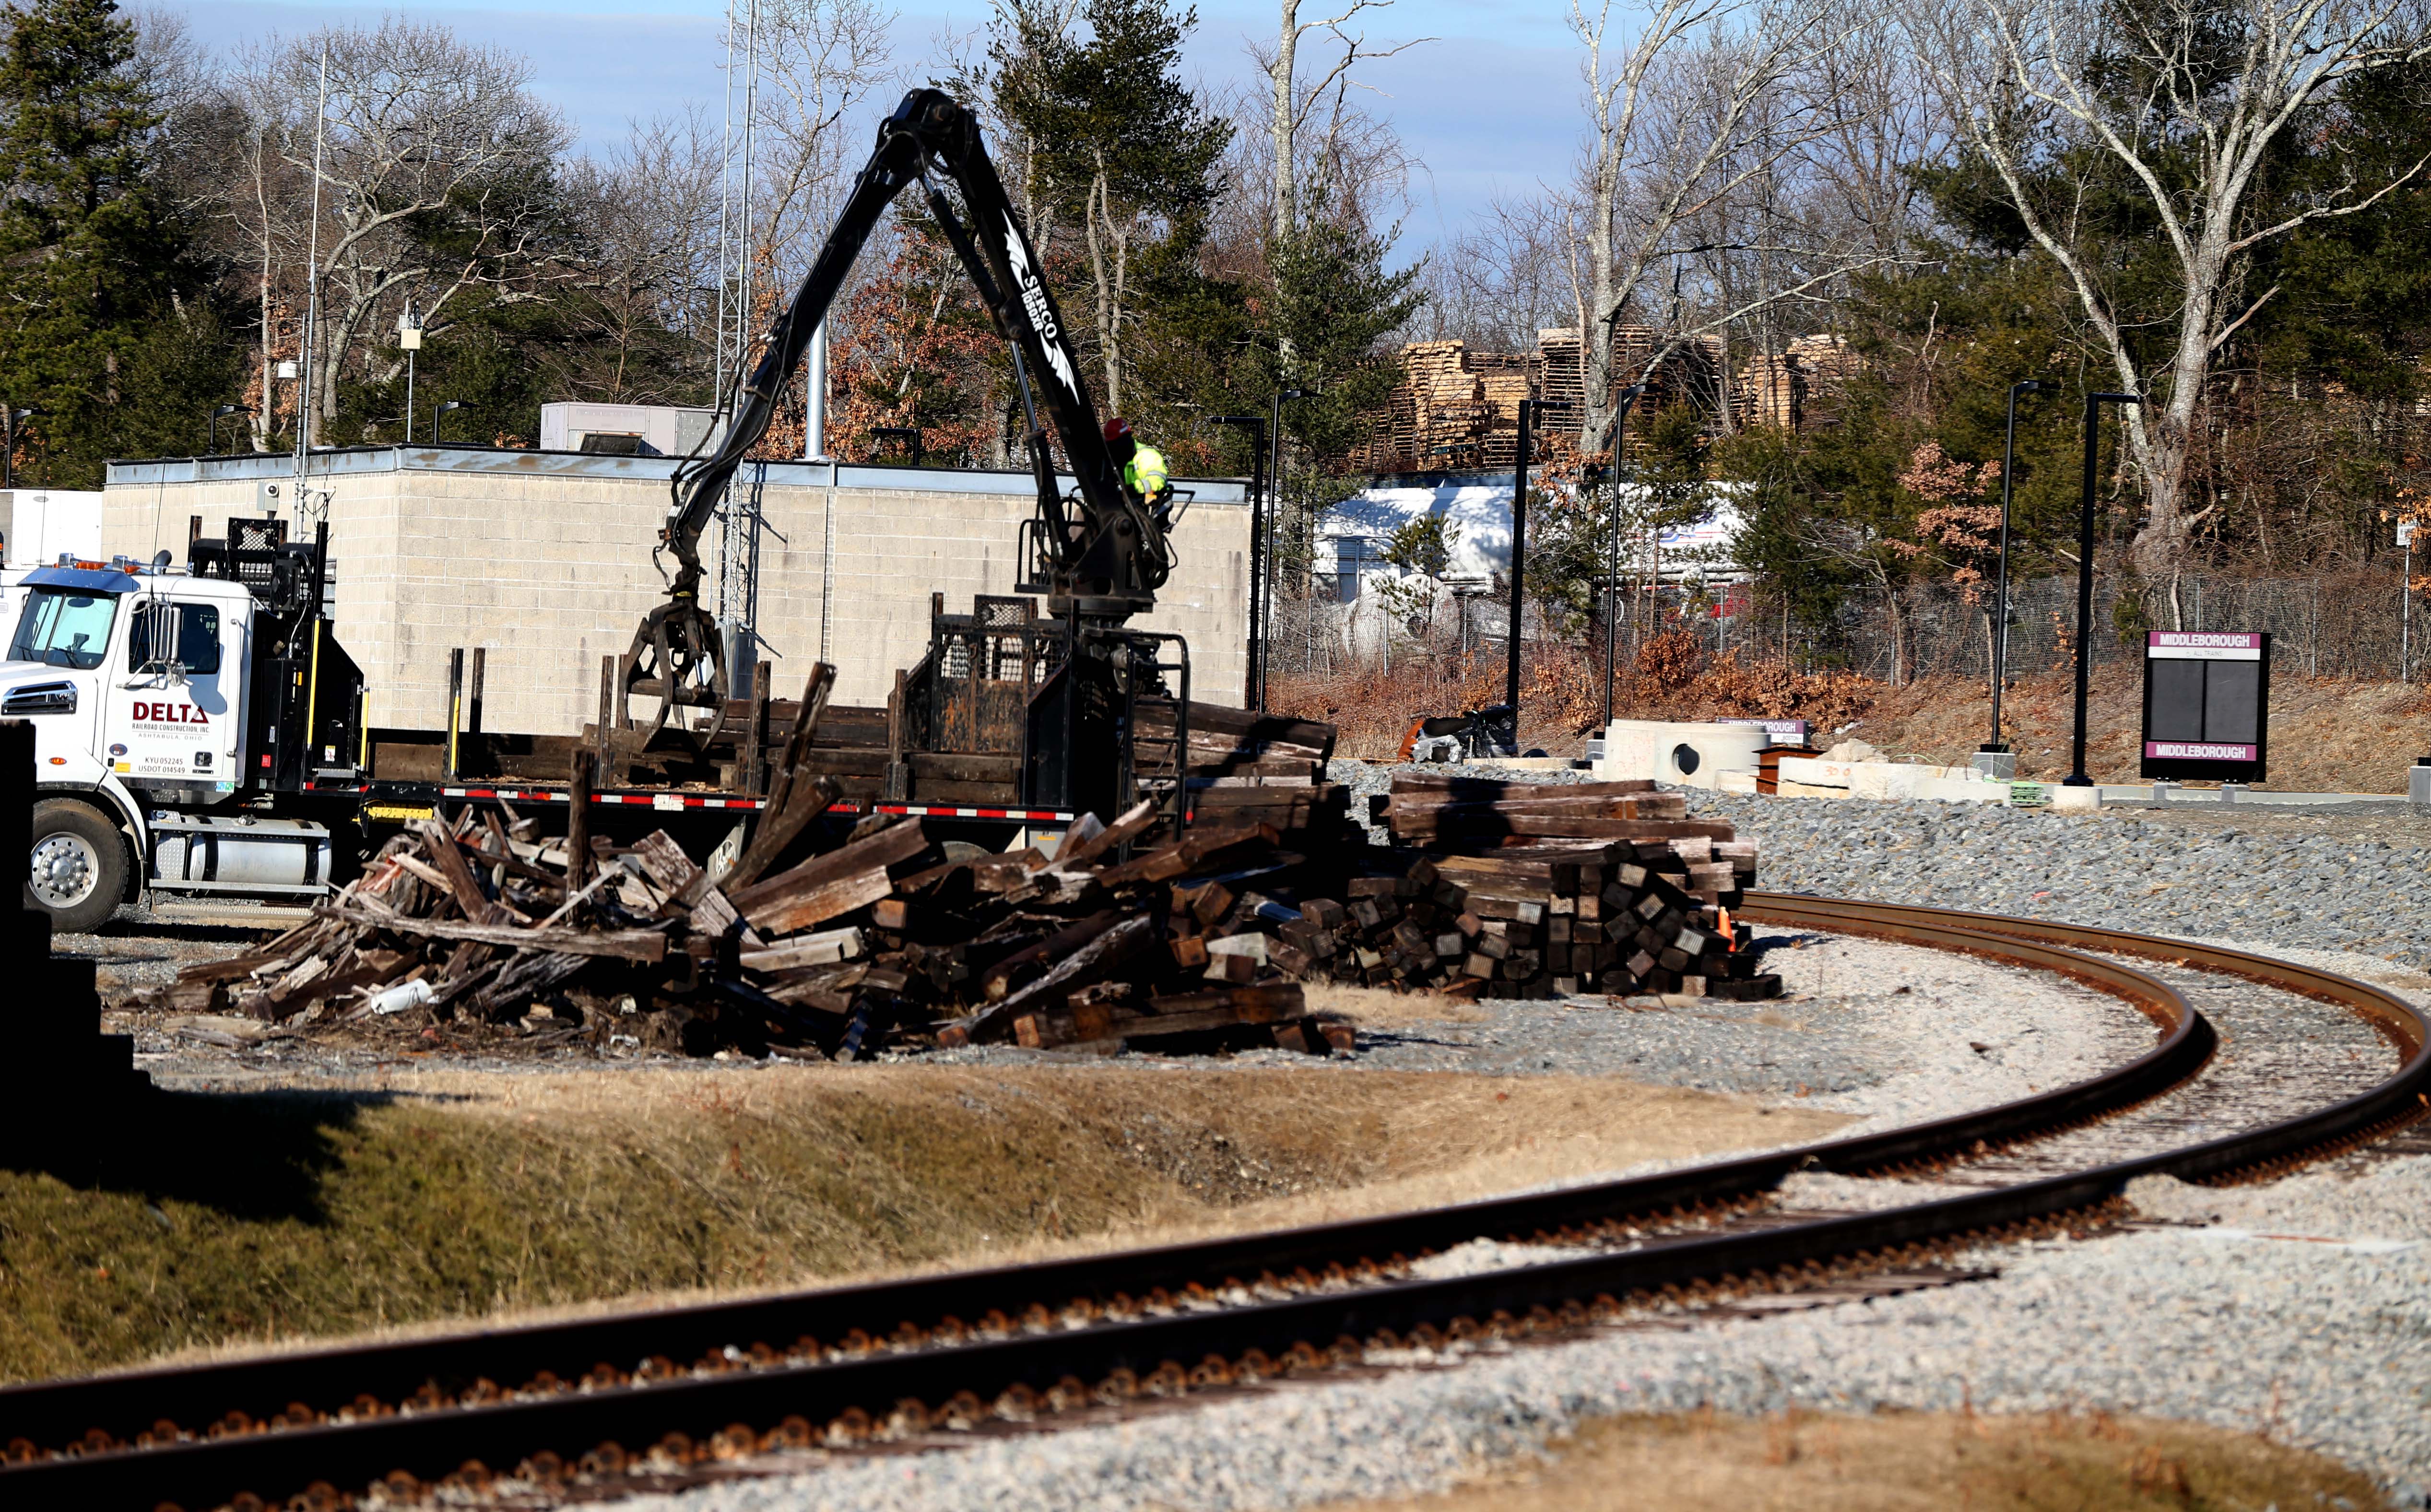 New Bedford wants South Coast Rail, despite lawsuit threat, per attorney